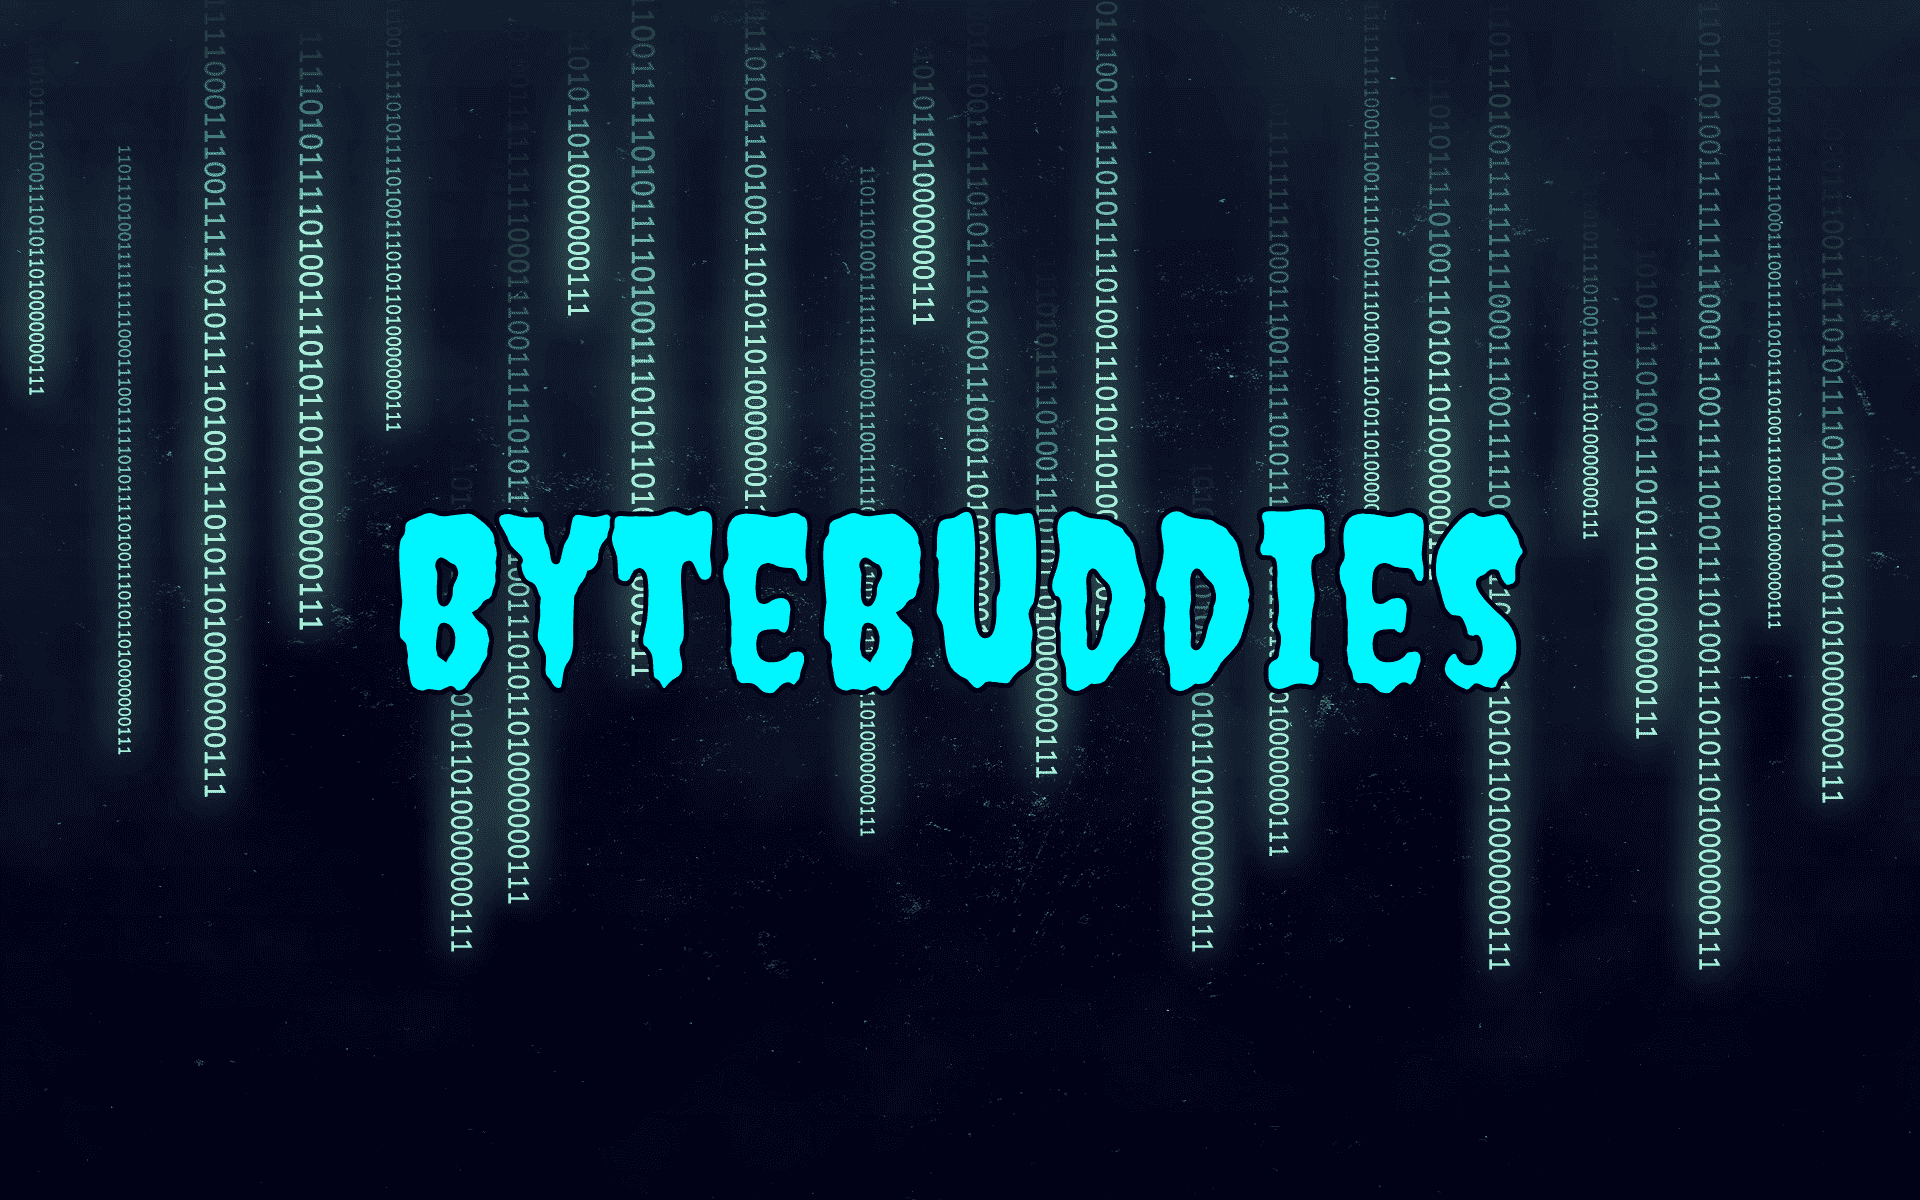 ByteBuddies